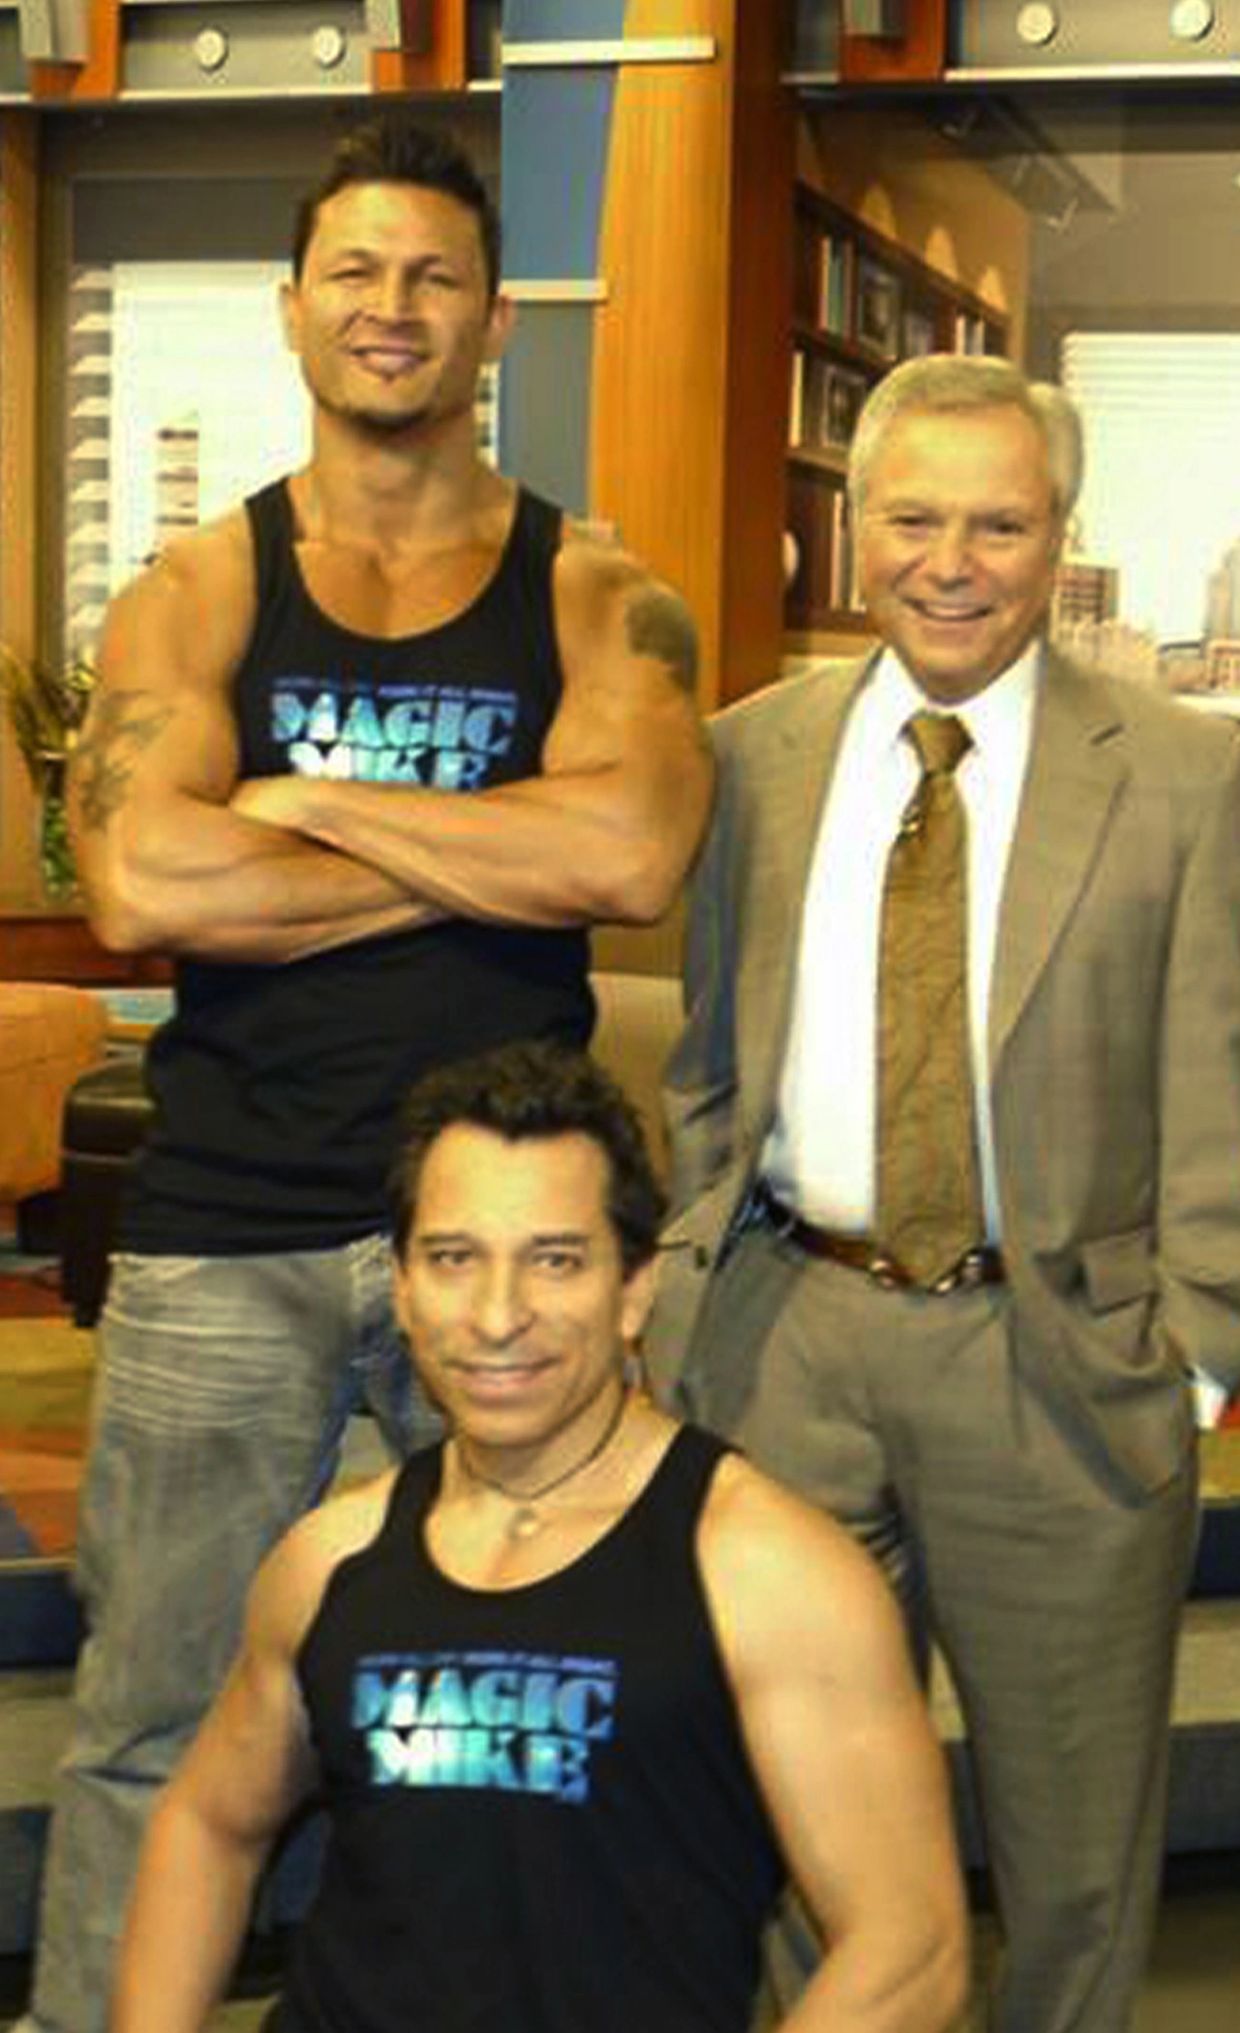 Arizona male strippers on Fox 10 Arizona News promoting 2012 movie premiere Magic Mike in Scottsdale